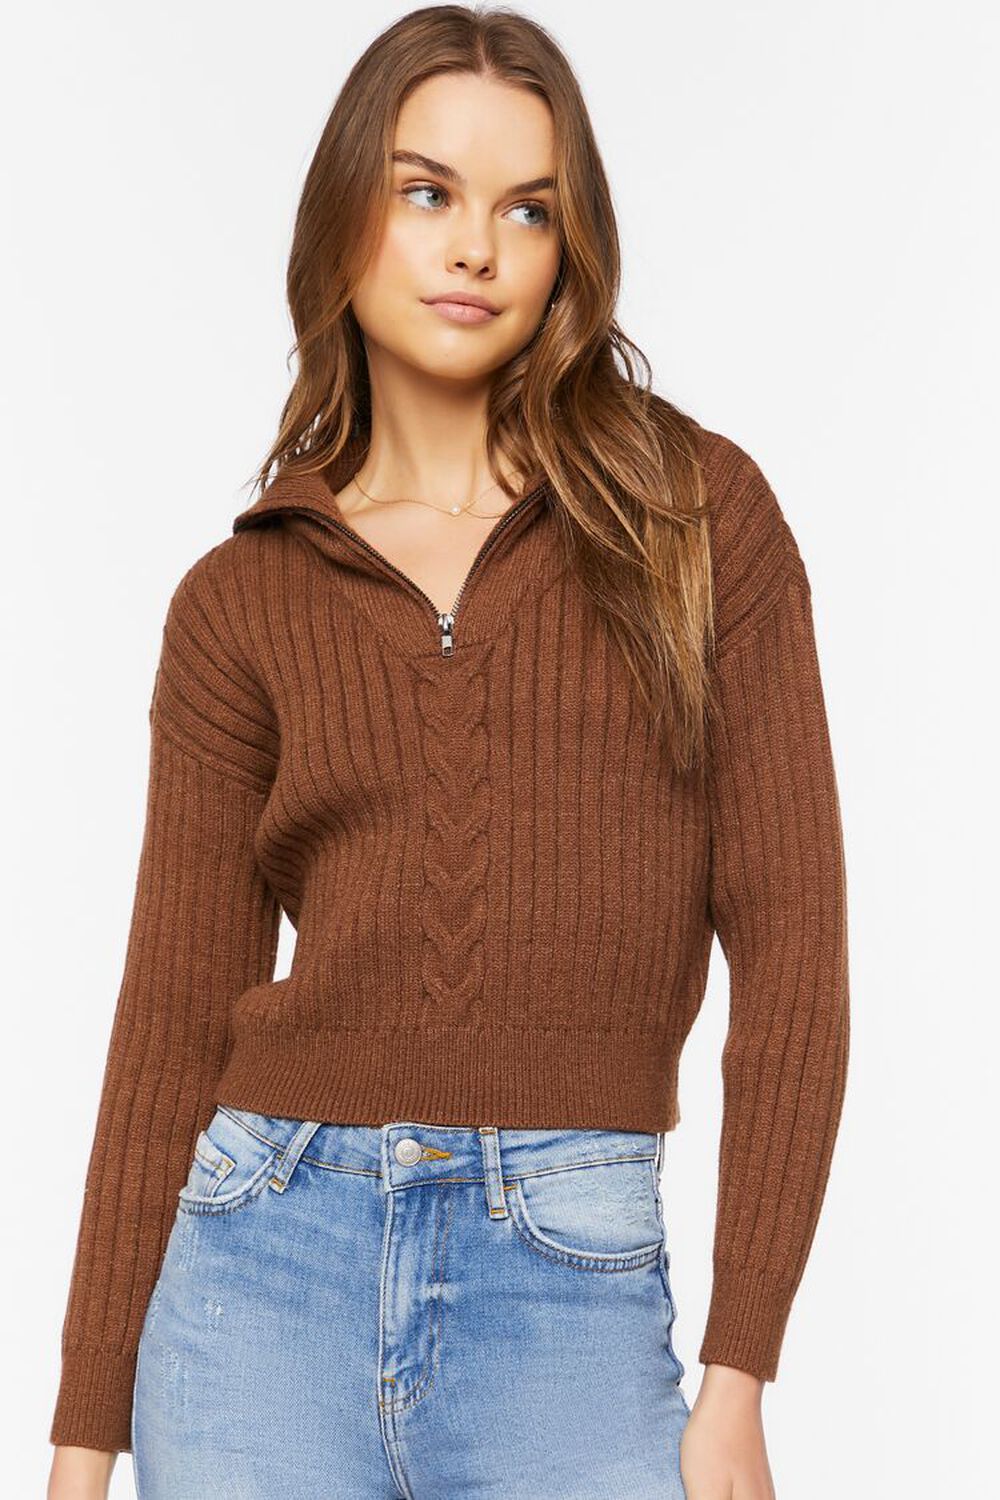 CHOCOLATE Ribbed Half-Zip Sweater, image 1